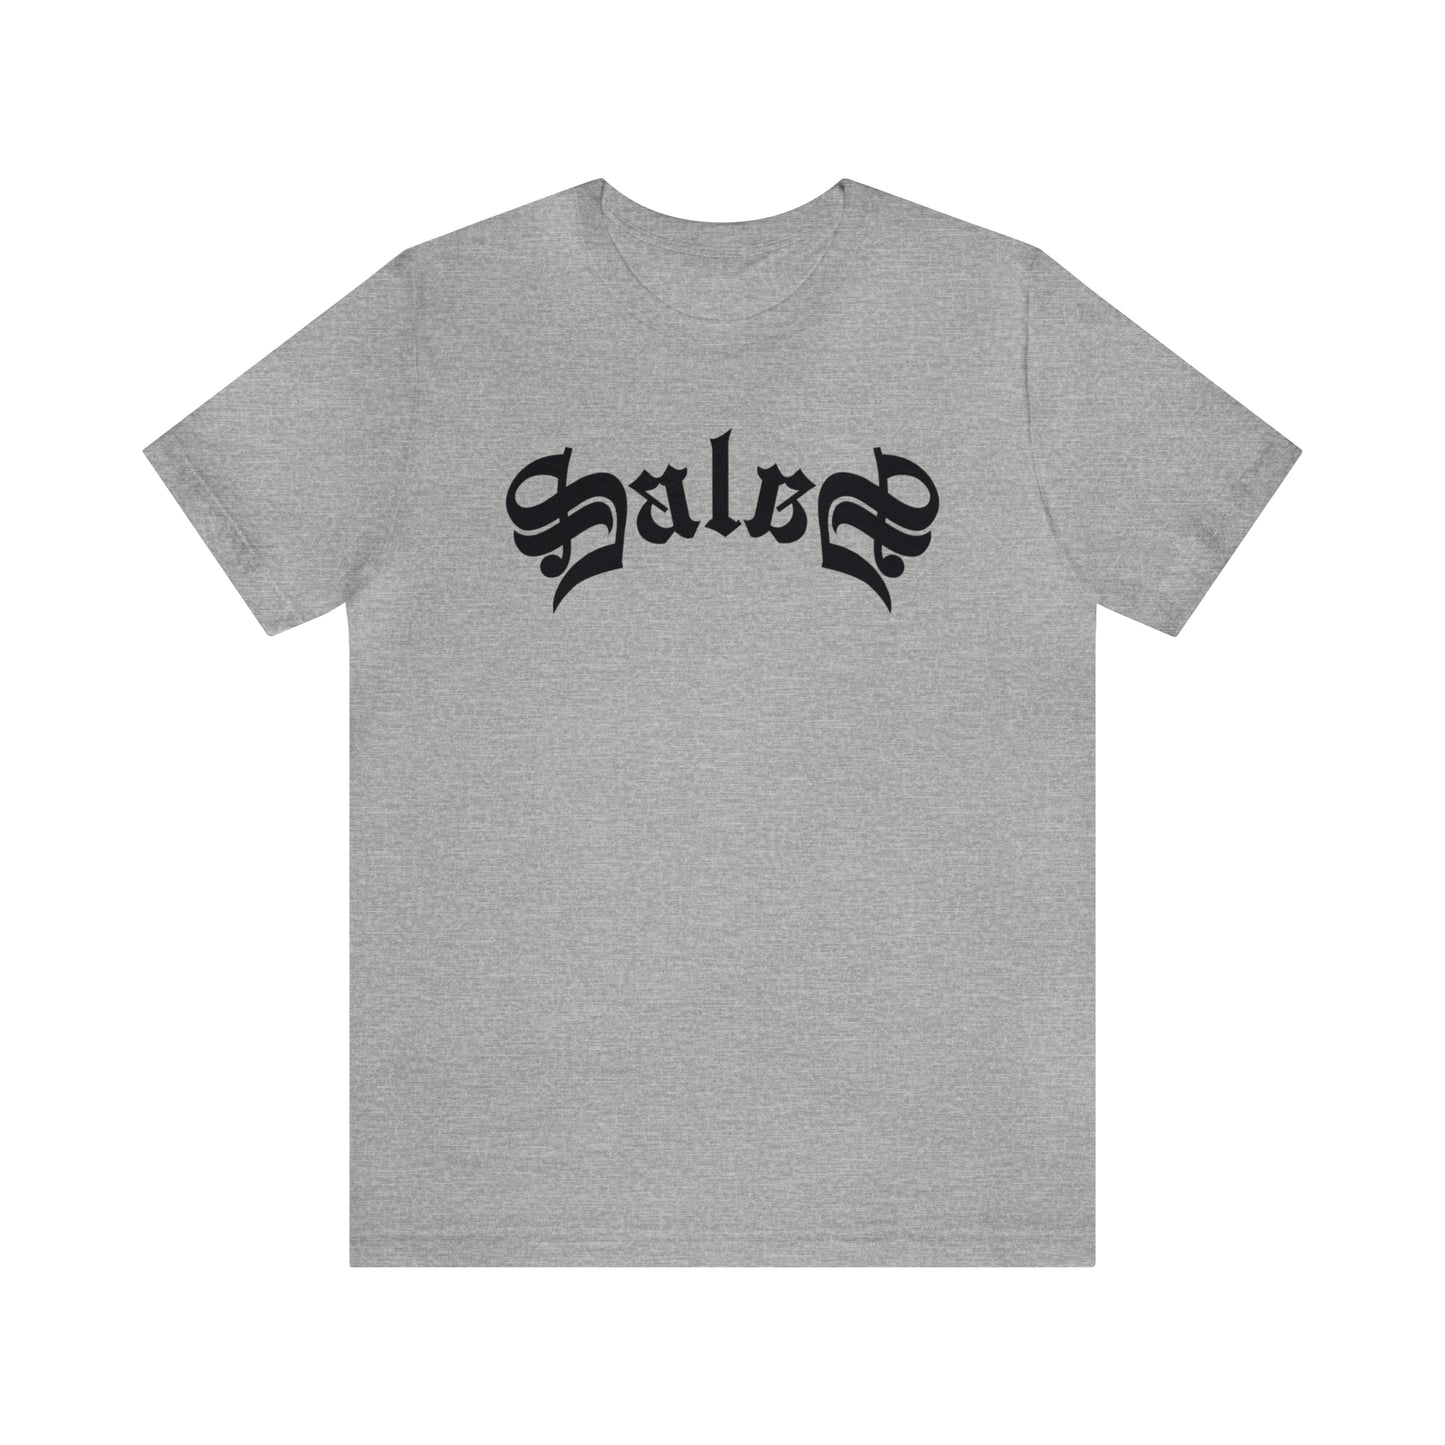 Salas (831) in Black Ink - Salinas, California - Unisex Jersey Short Sleeve Tee